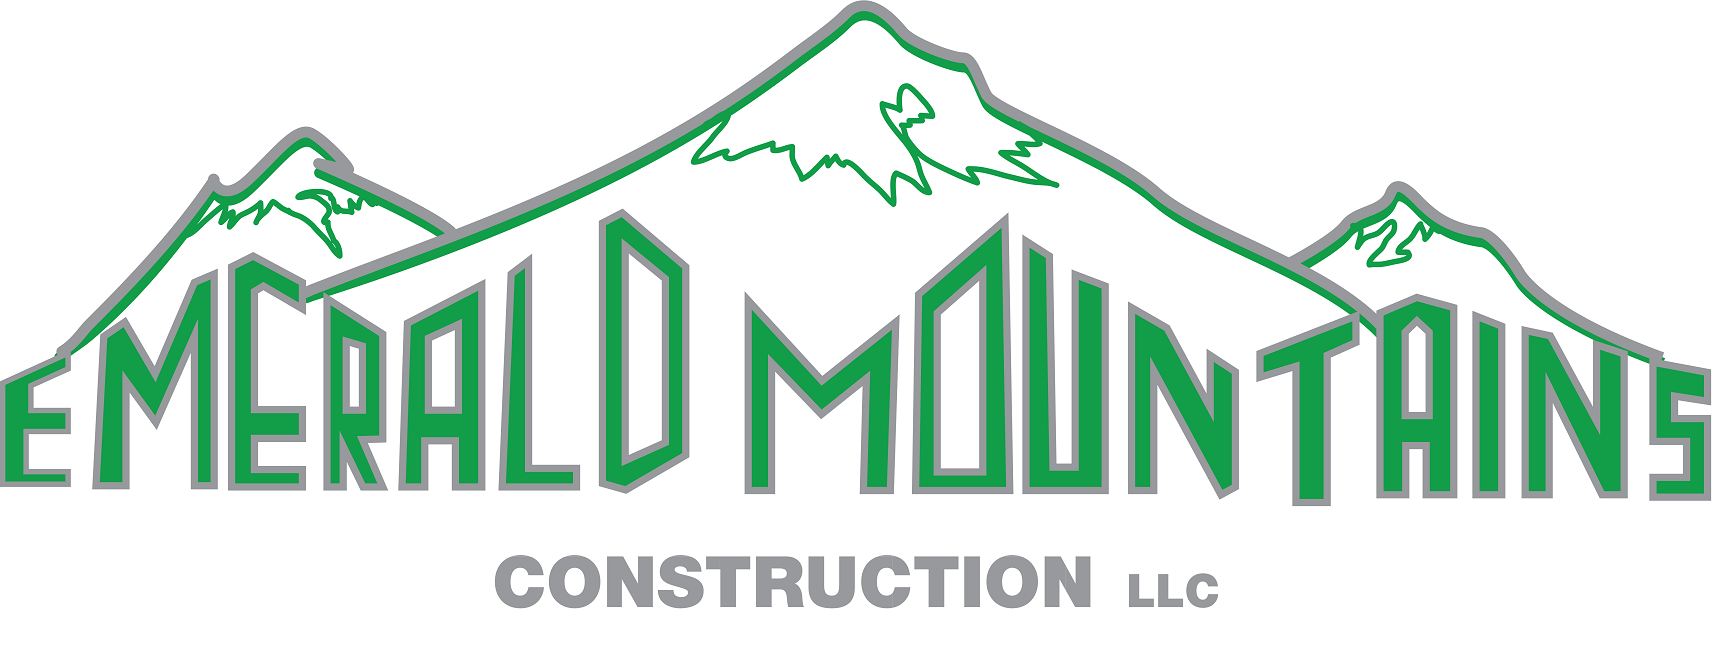 Emerald Mountains Construction, LLC Logo